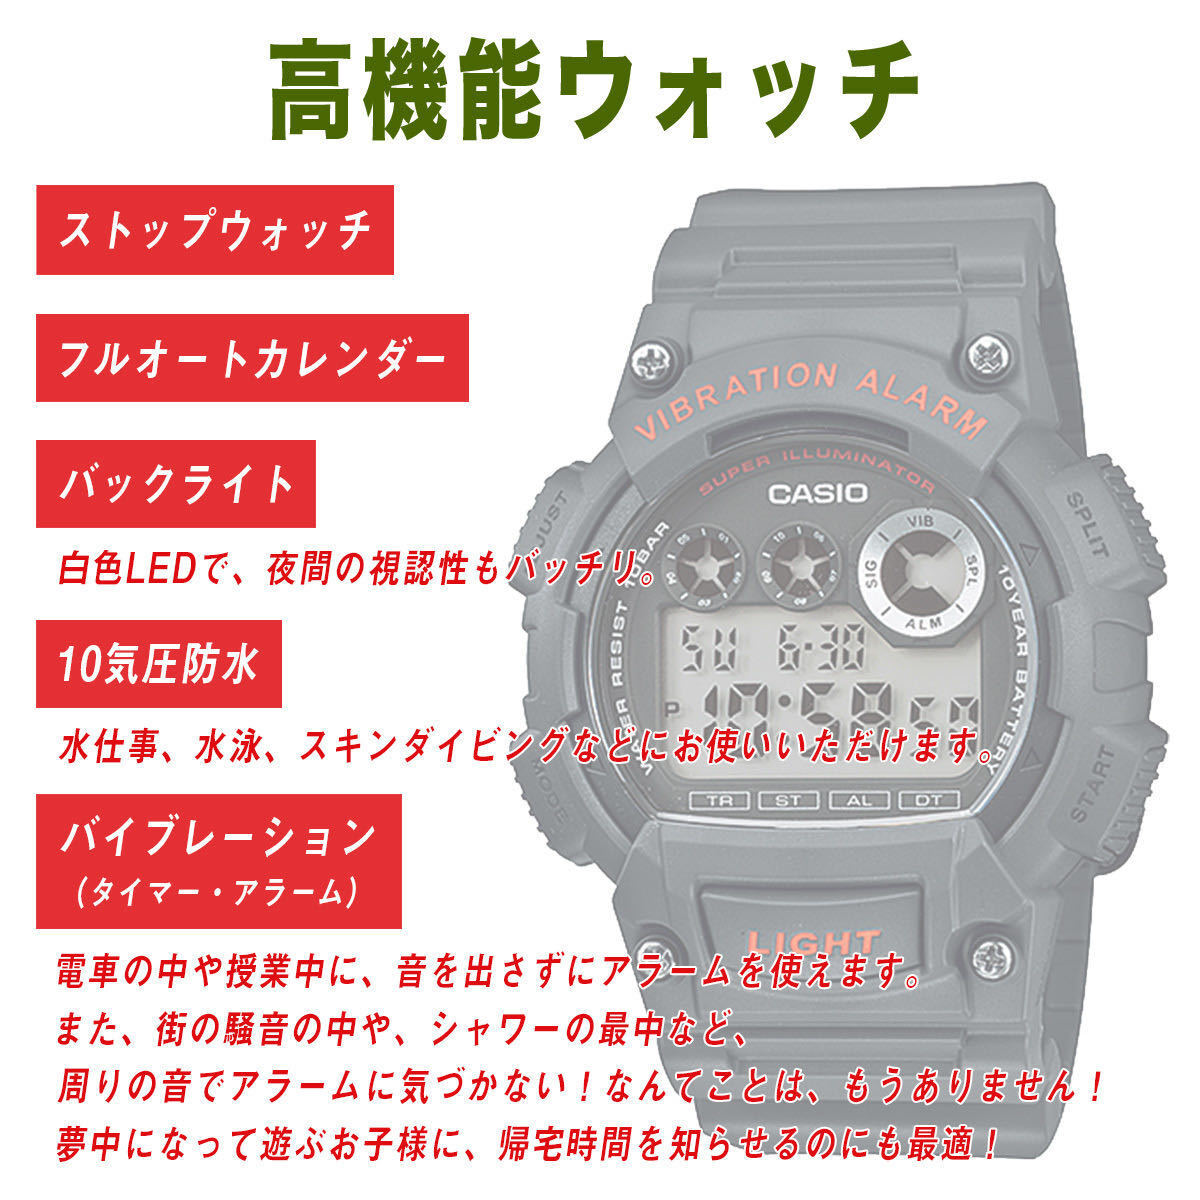 CASIO カシオ W735 ネイビー 紺 腕時計 バイブレーション アラーム 三つ目 デジタル 男の子 メンズ 男性 キッズ 振動 バイブ 防水 軽量